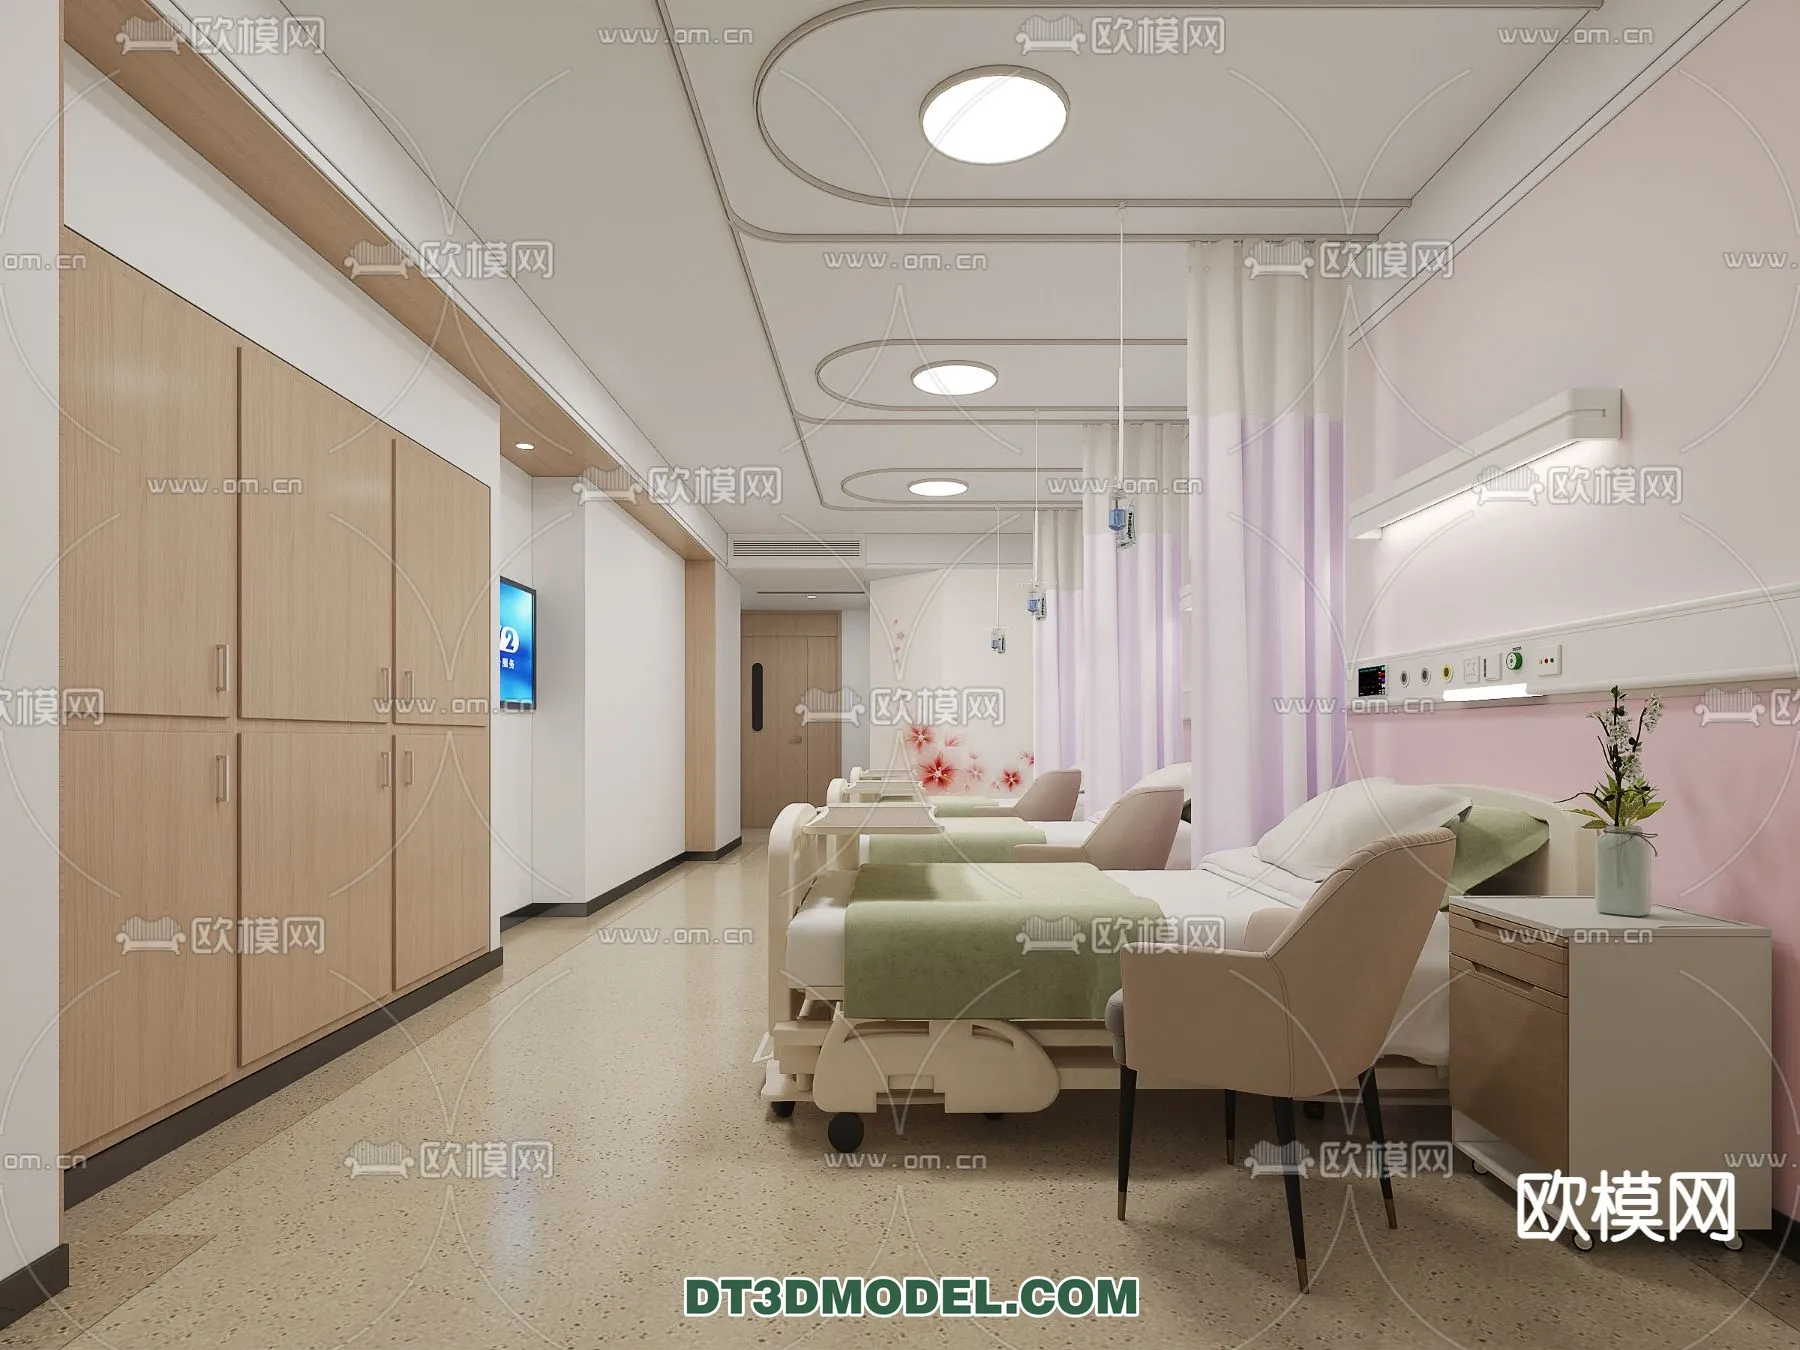 HOSPITAL 3D SCENES – MODERN – 0150